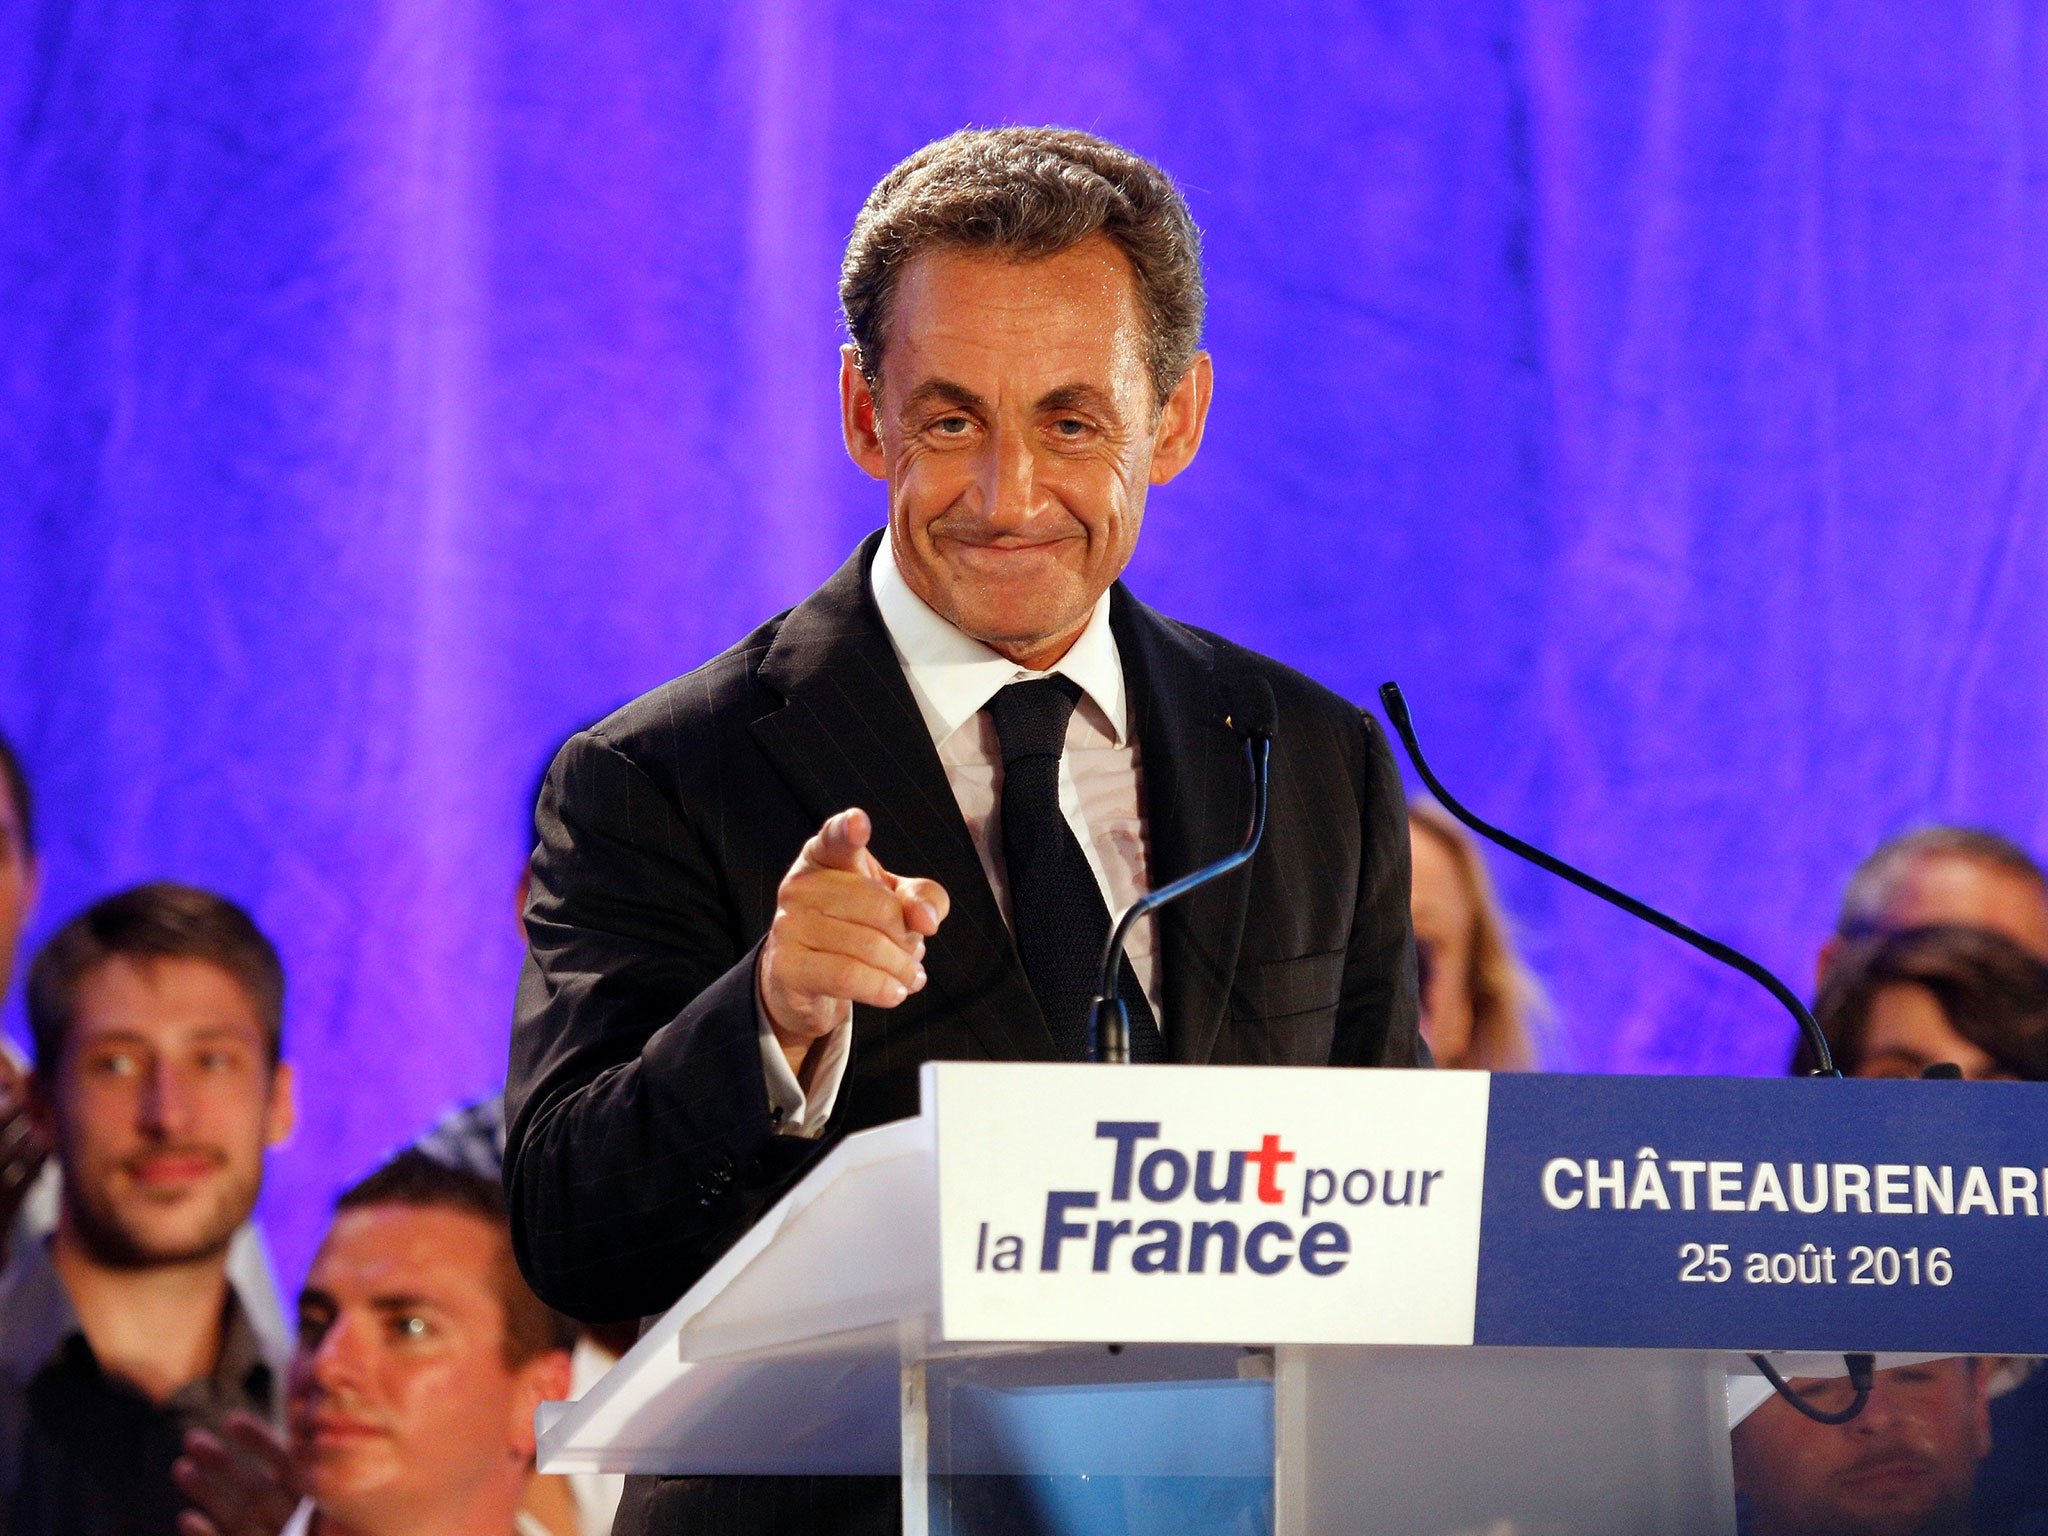 Mr Sarkozy wants to open migrant ‘hotspots’ at Calais to process UK asylum applications